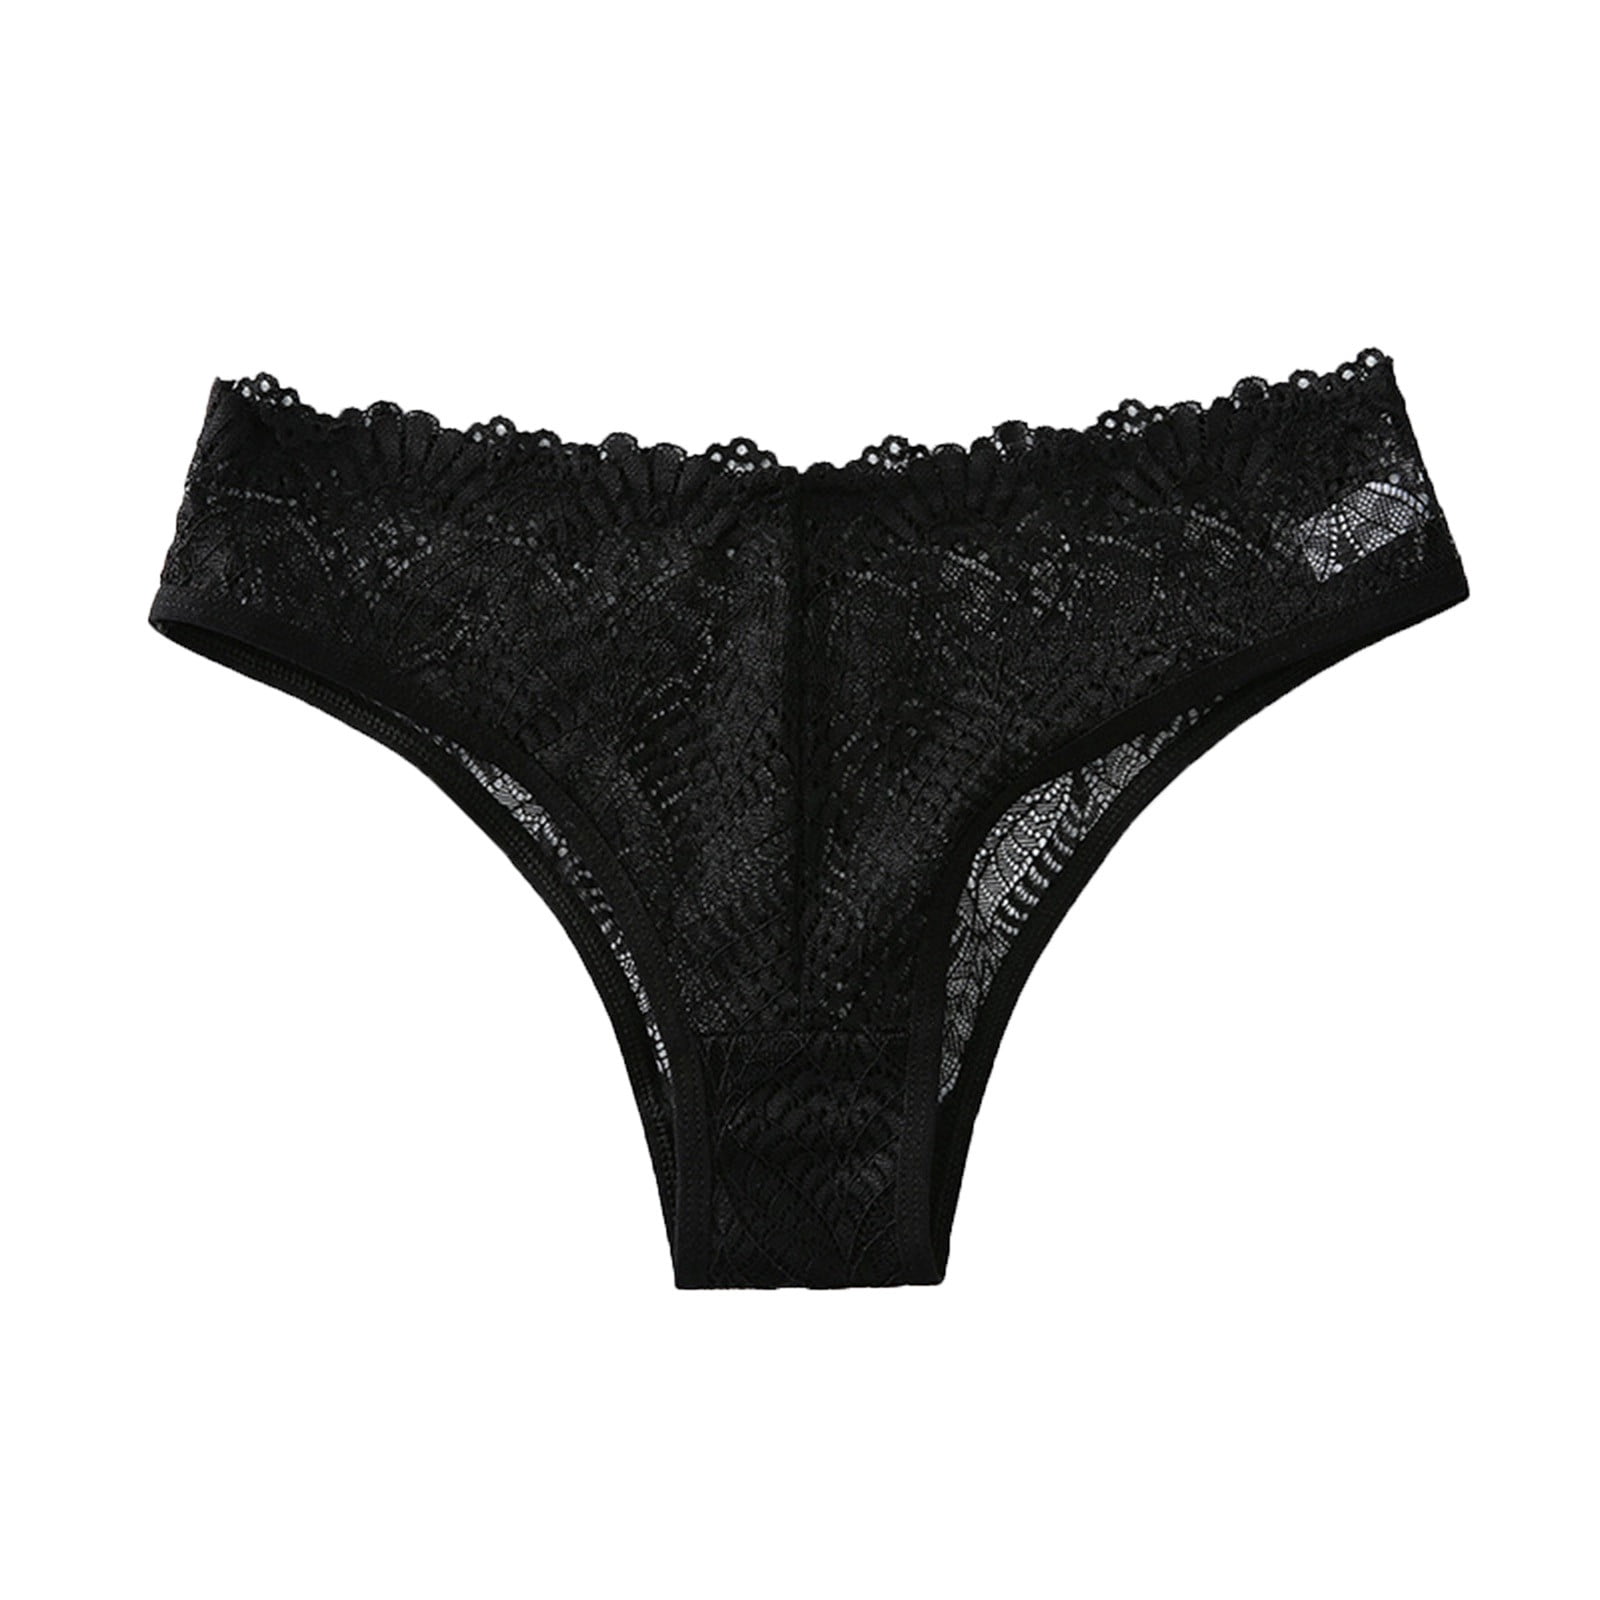 JNGSA Womens Thong Underwear, Lace Trim Soft Sexy Lingerie Panties